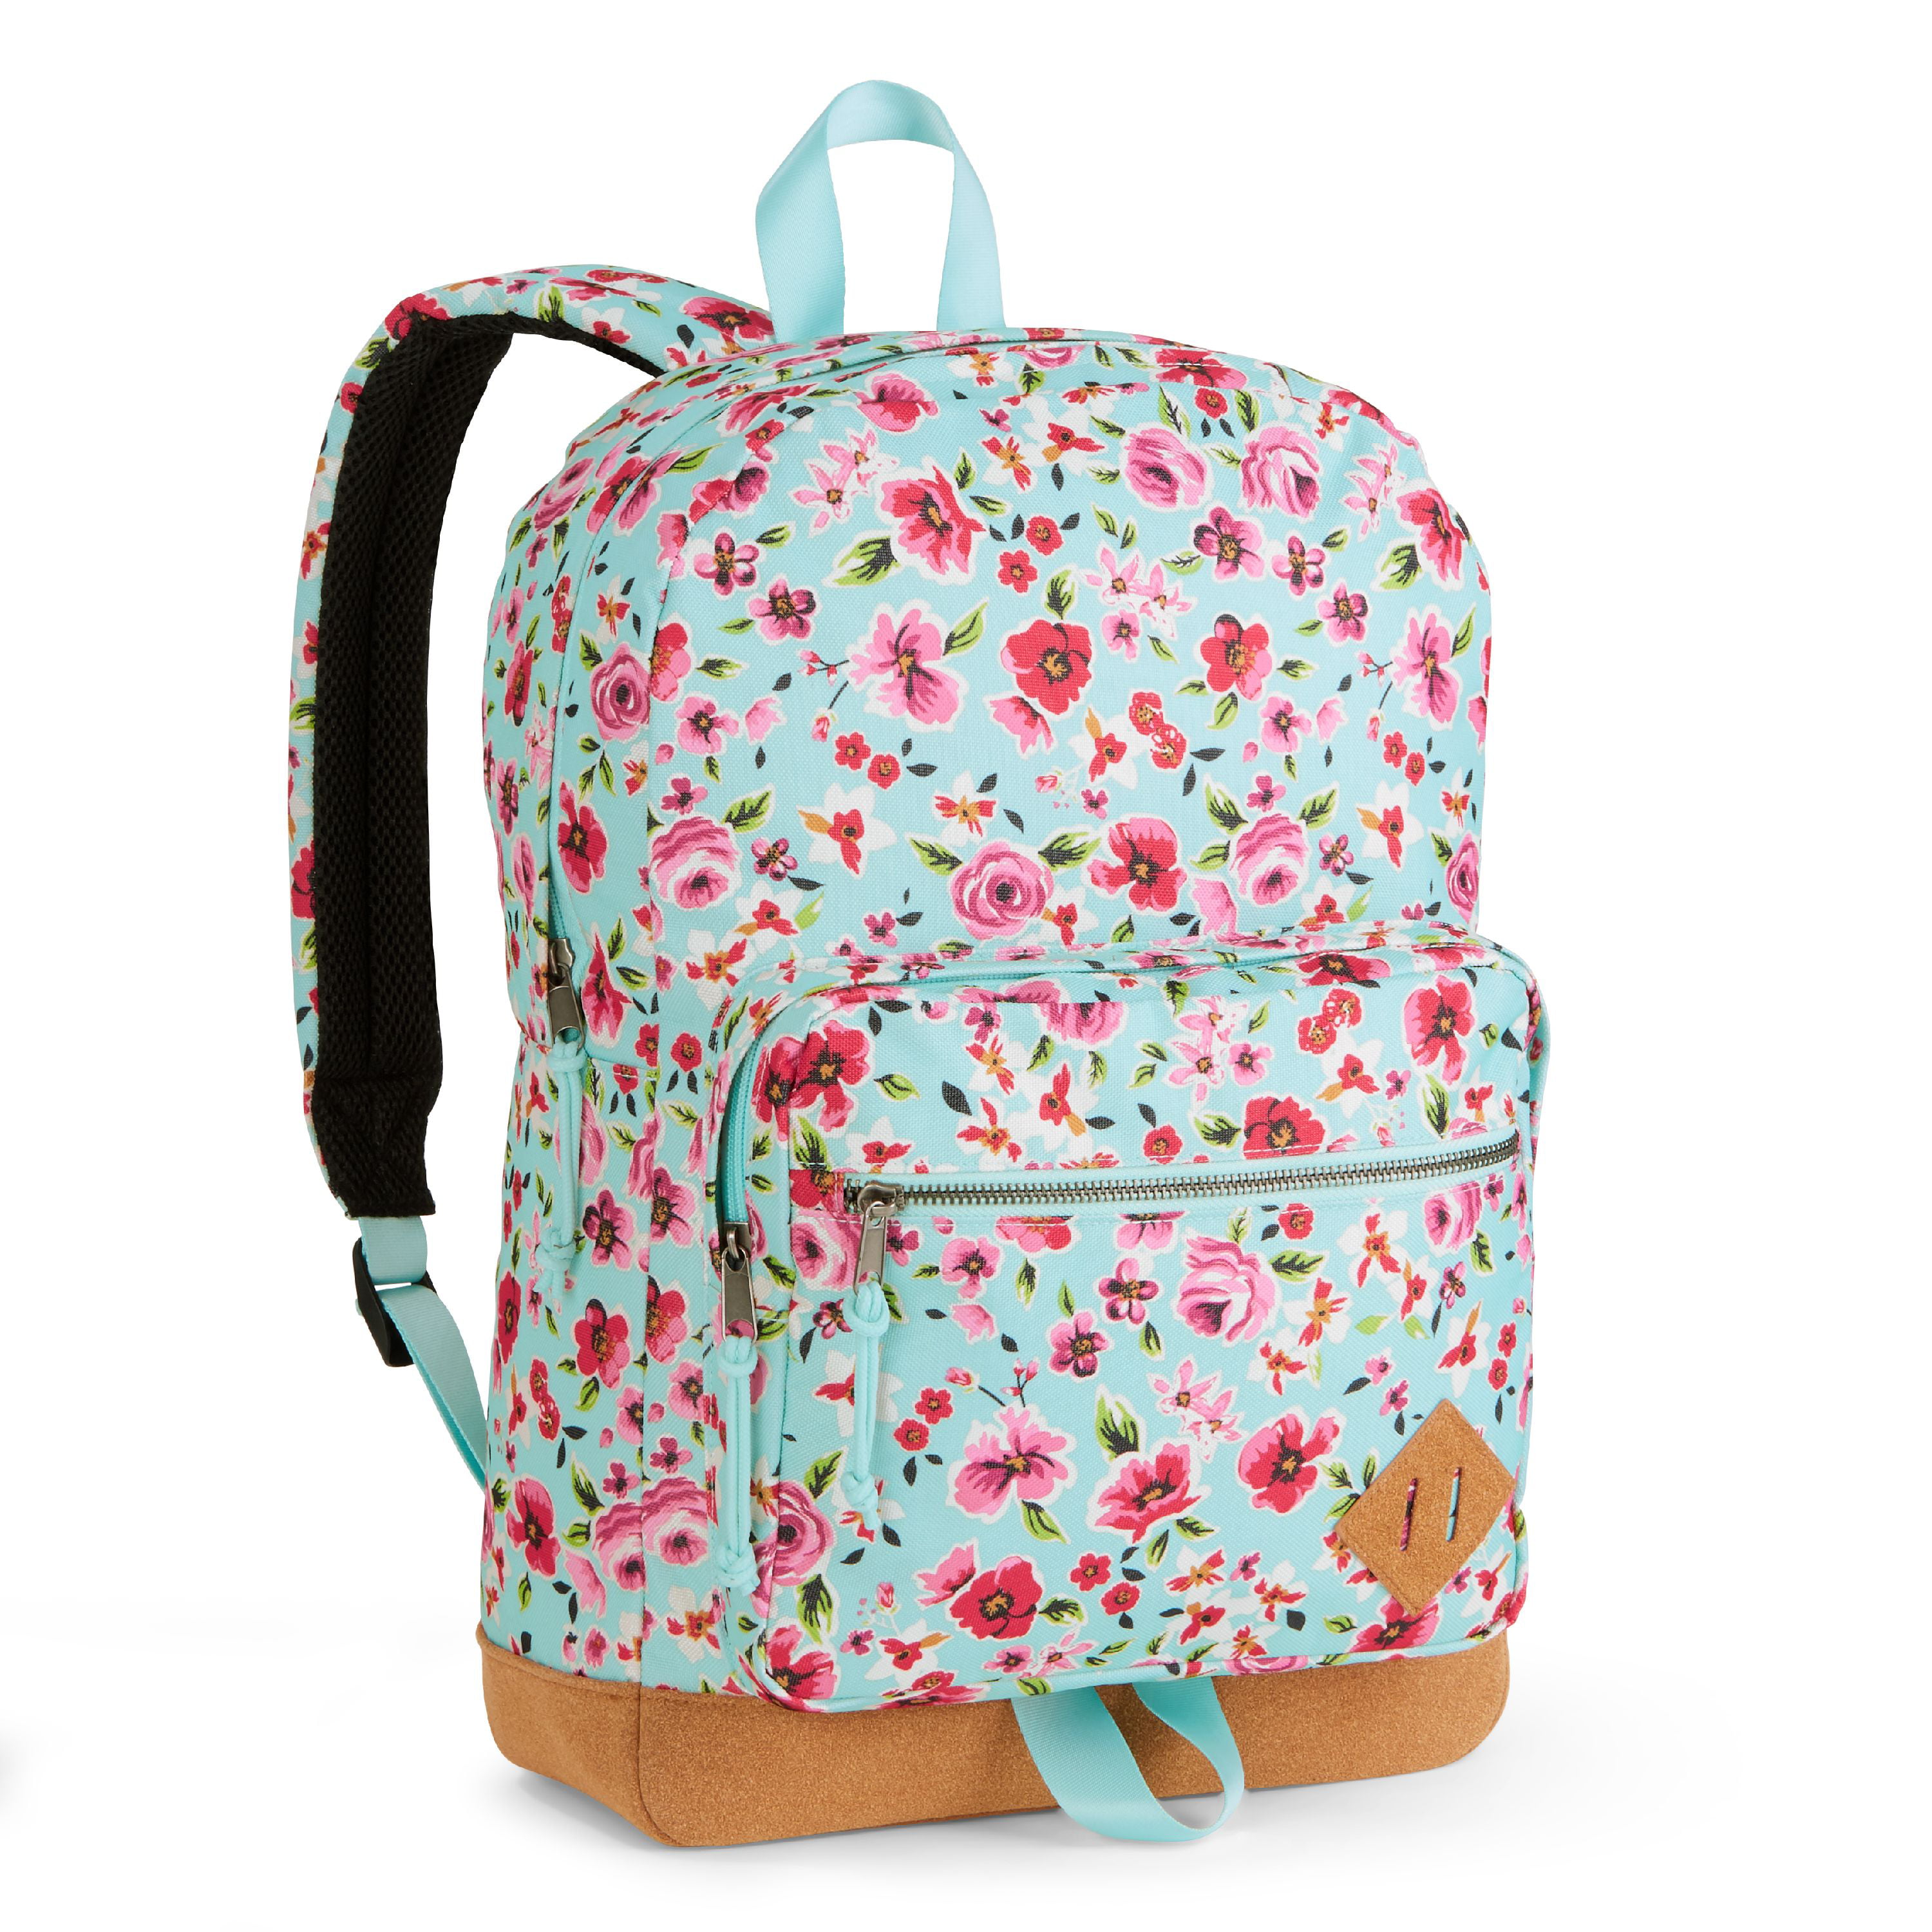 Backpack Field Pack Travel Bag Laptop Bag Fashion White Petaled Flowers 